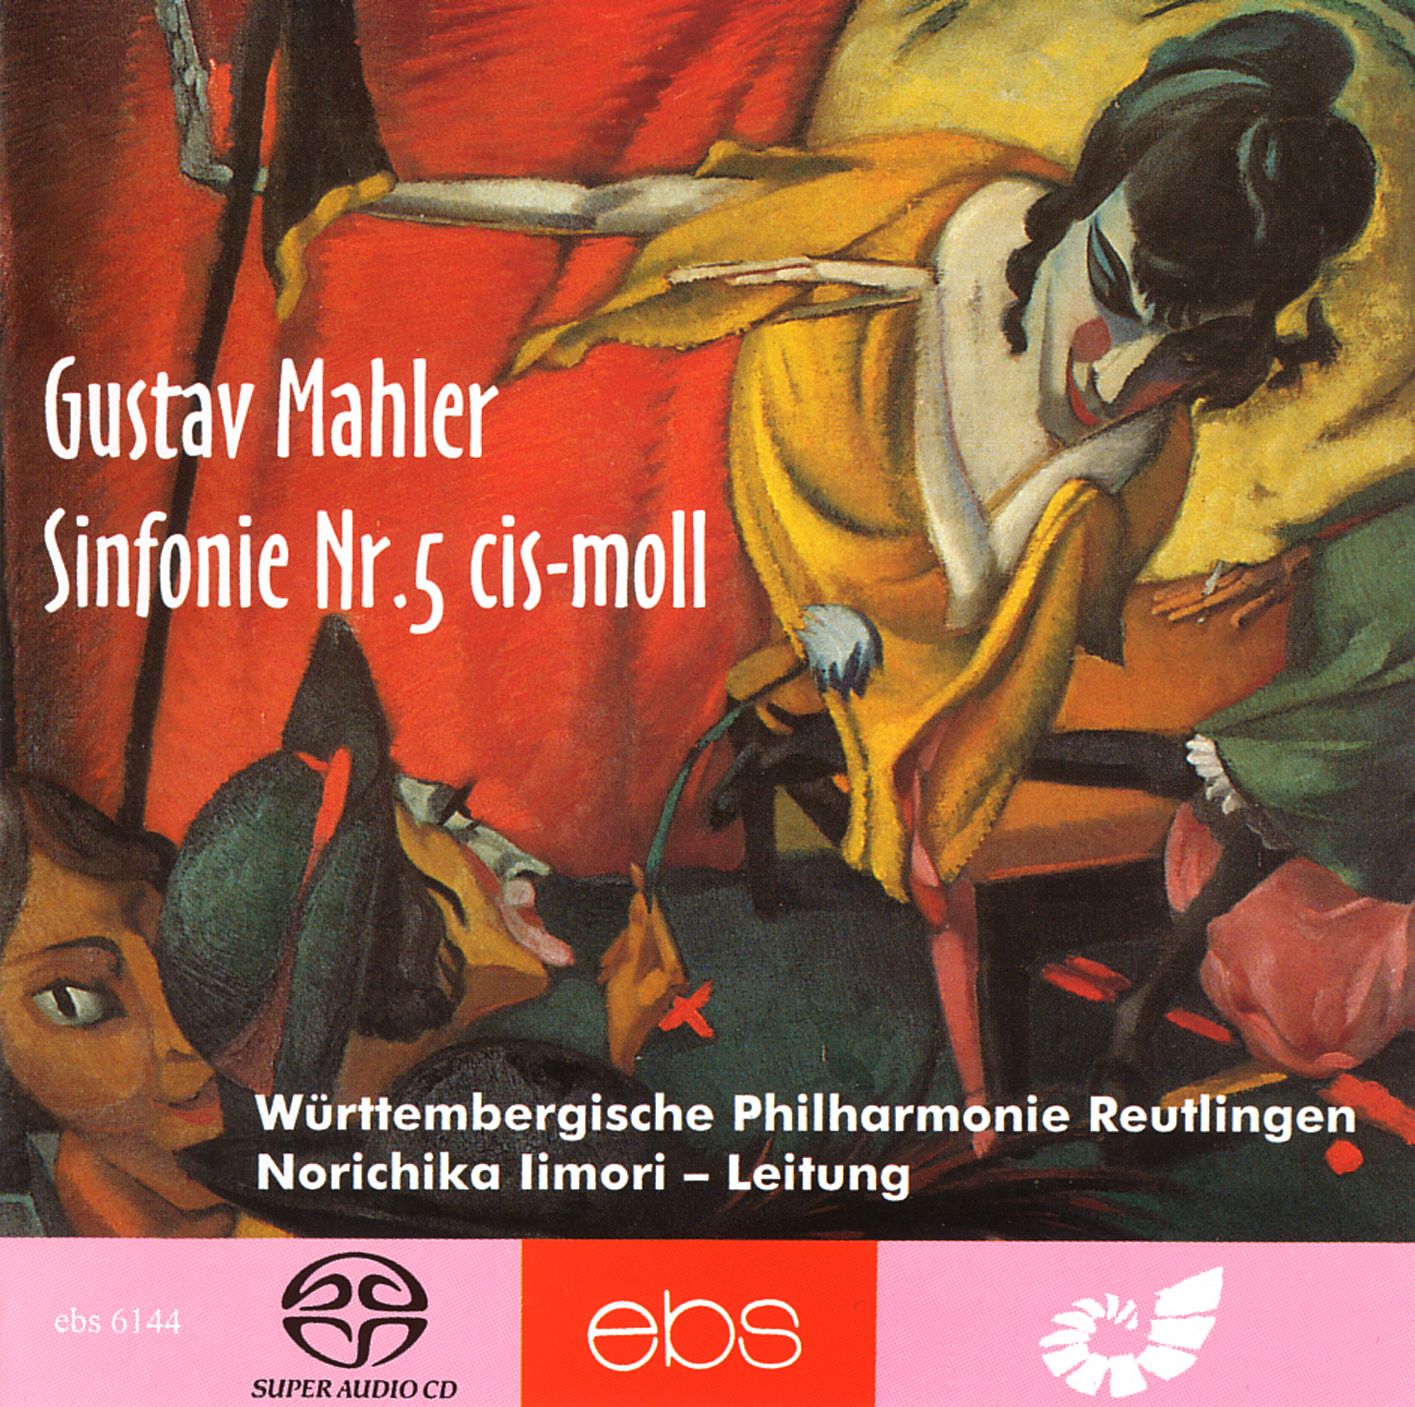 Gustav Mahler - Sinfonie Nr.5 cis-moll